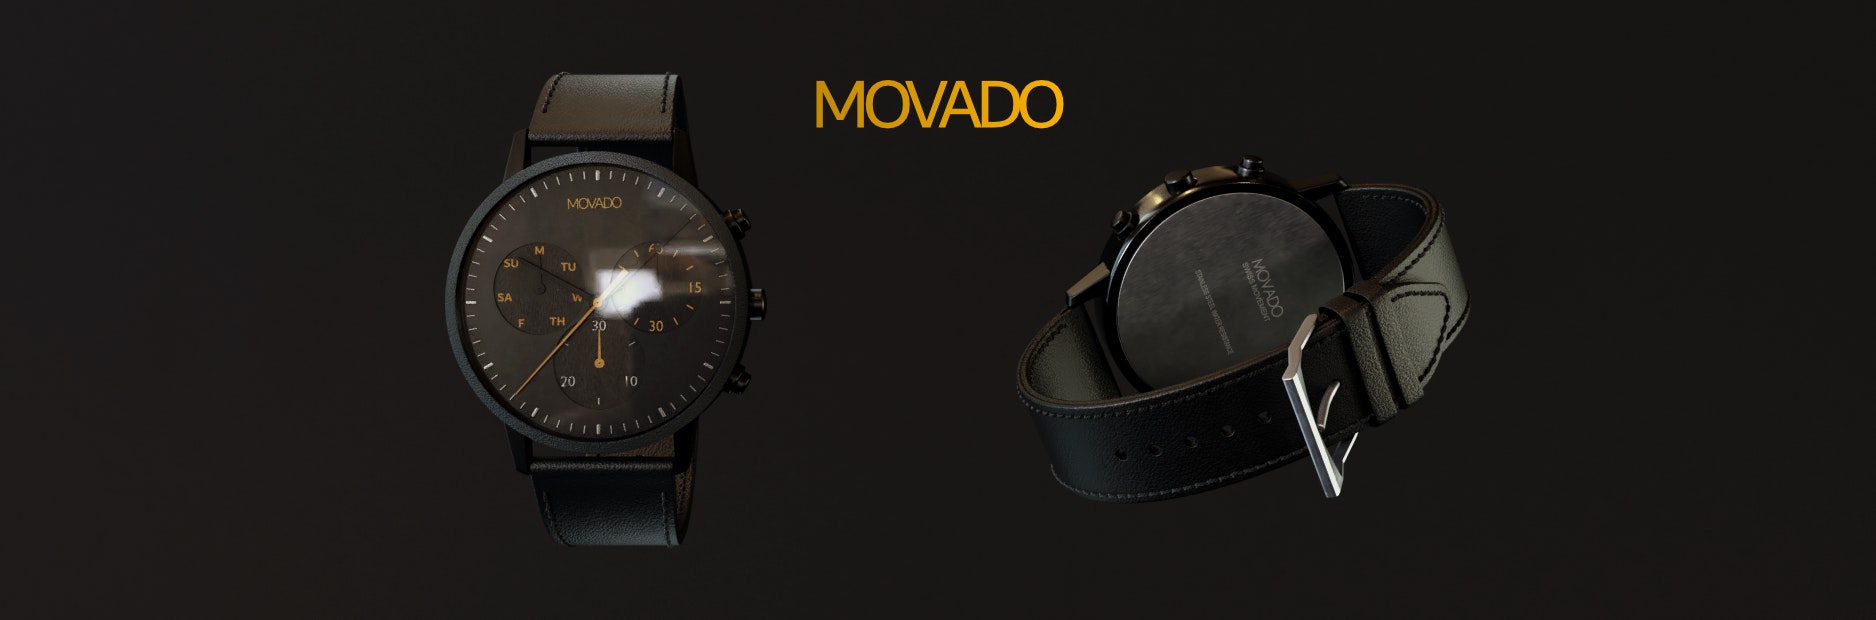 ساعة blender ) Movado )